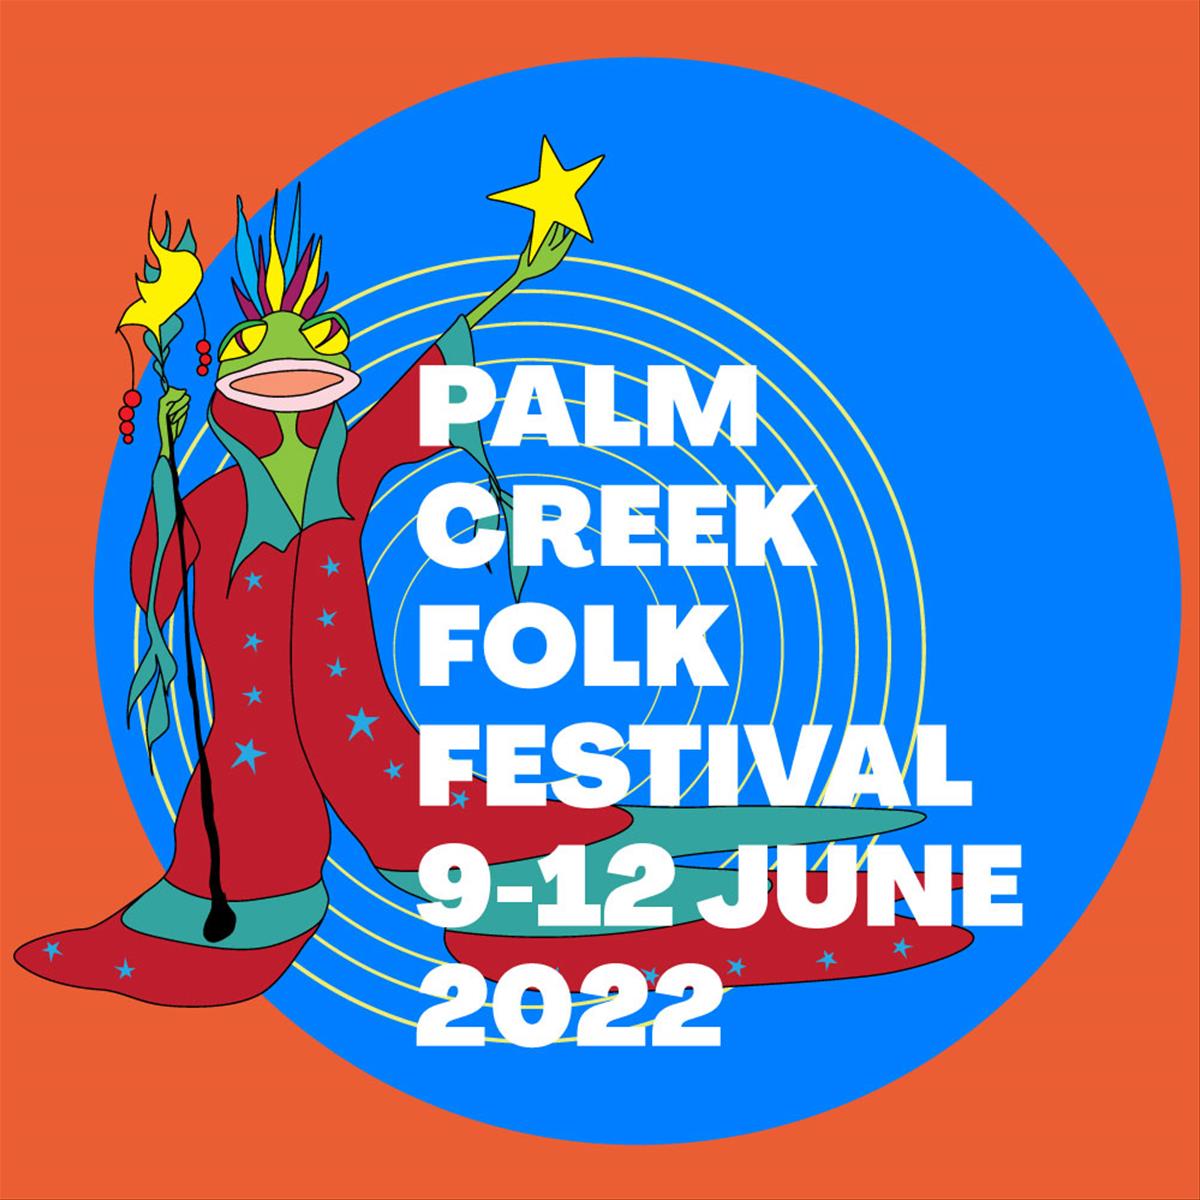 Palm Creek Folk Festival 2022